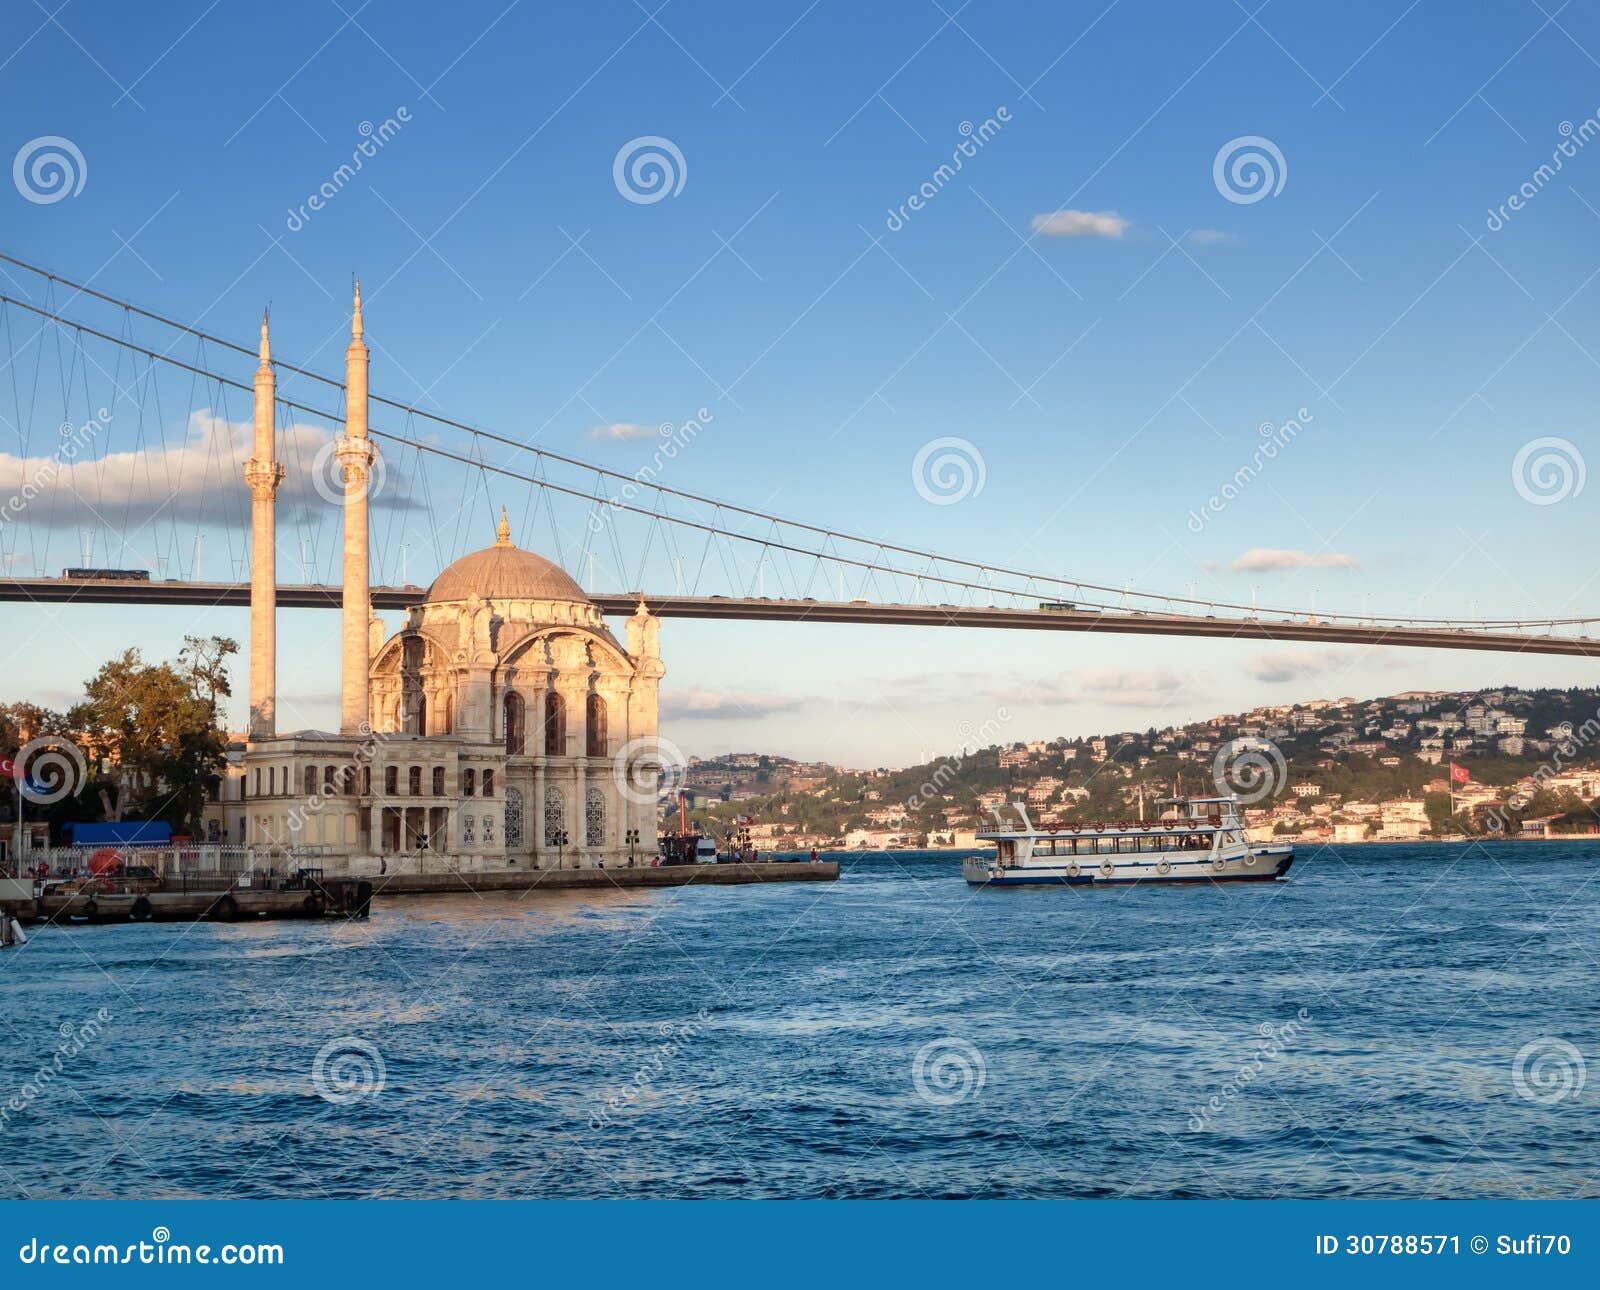 bosphorus bridge and ortakoy mosque in istanbul